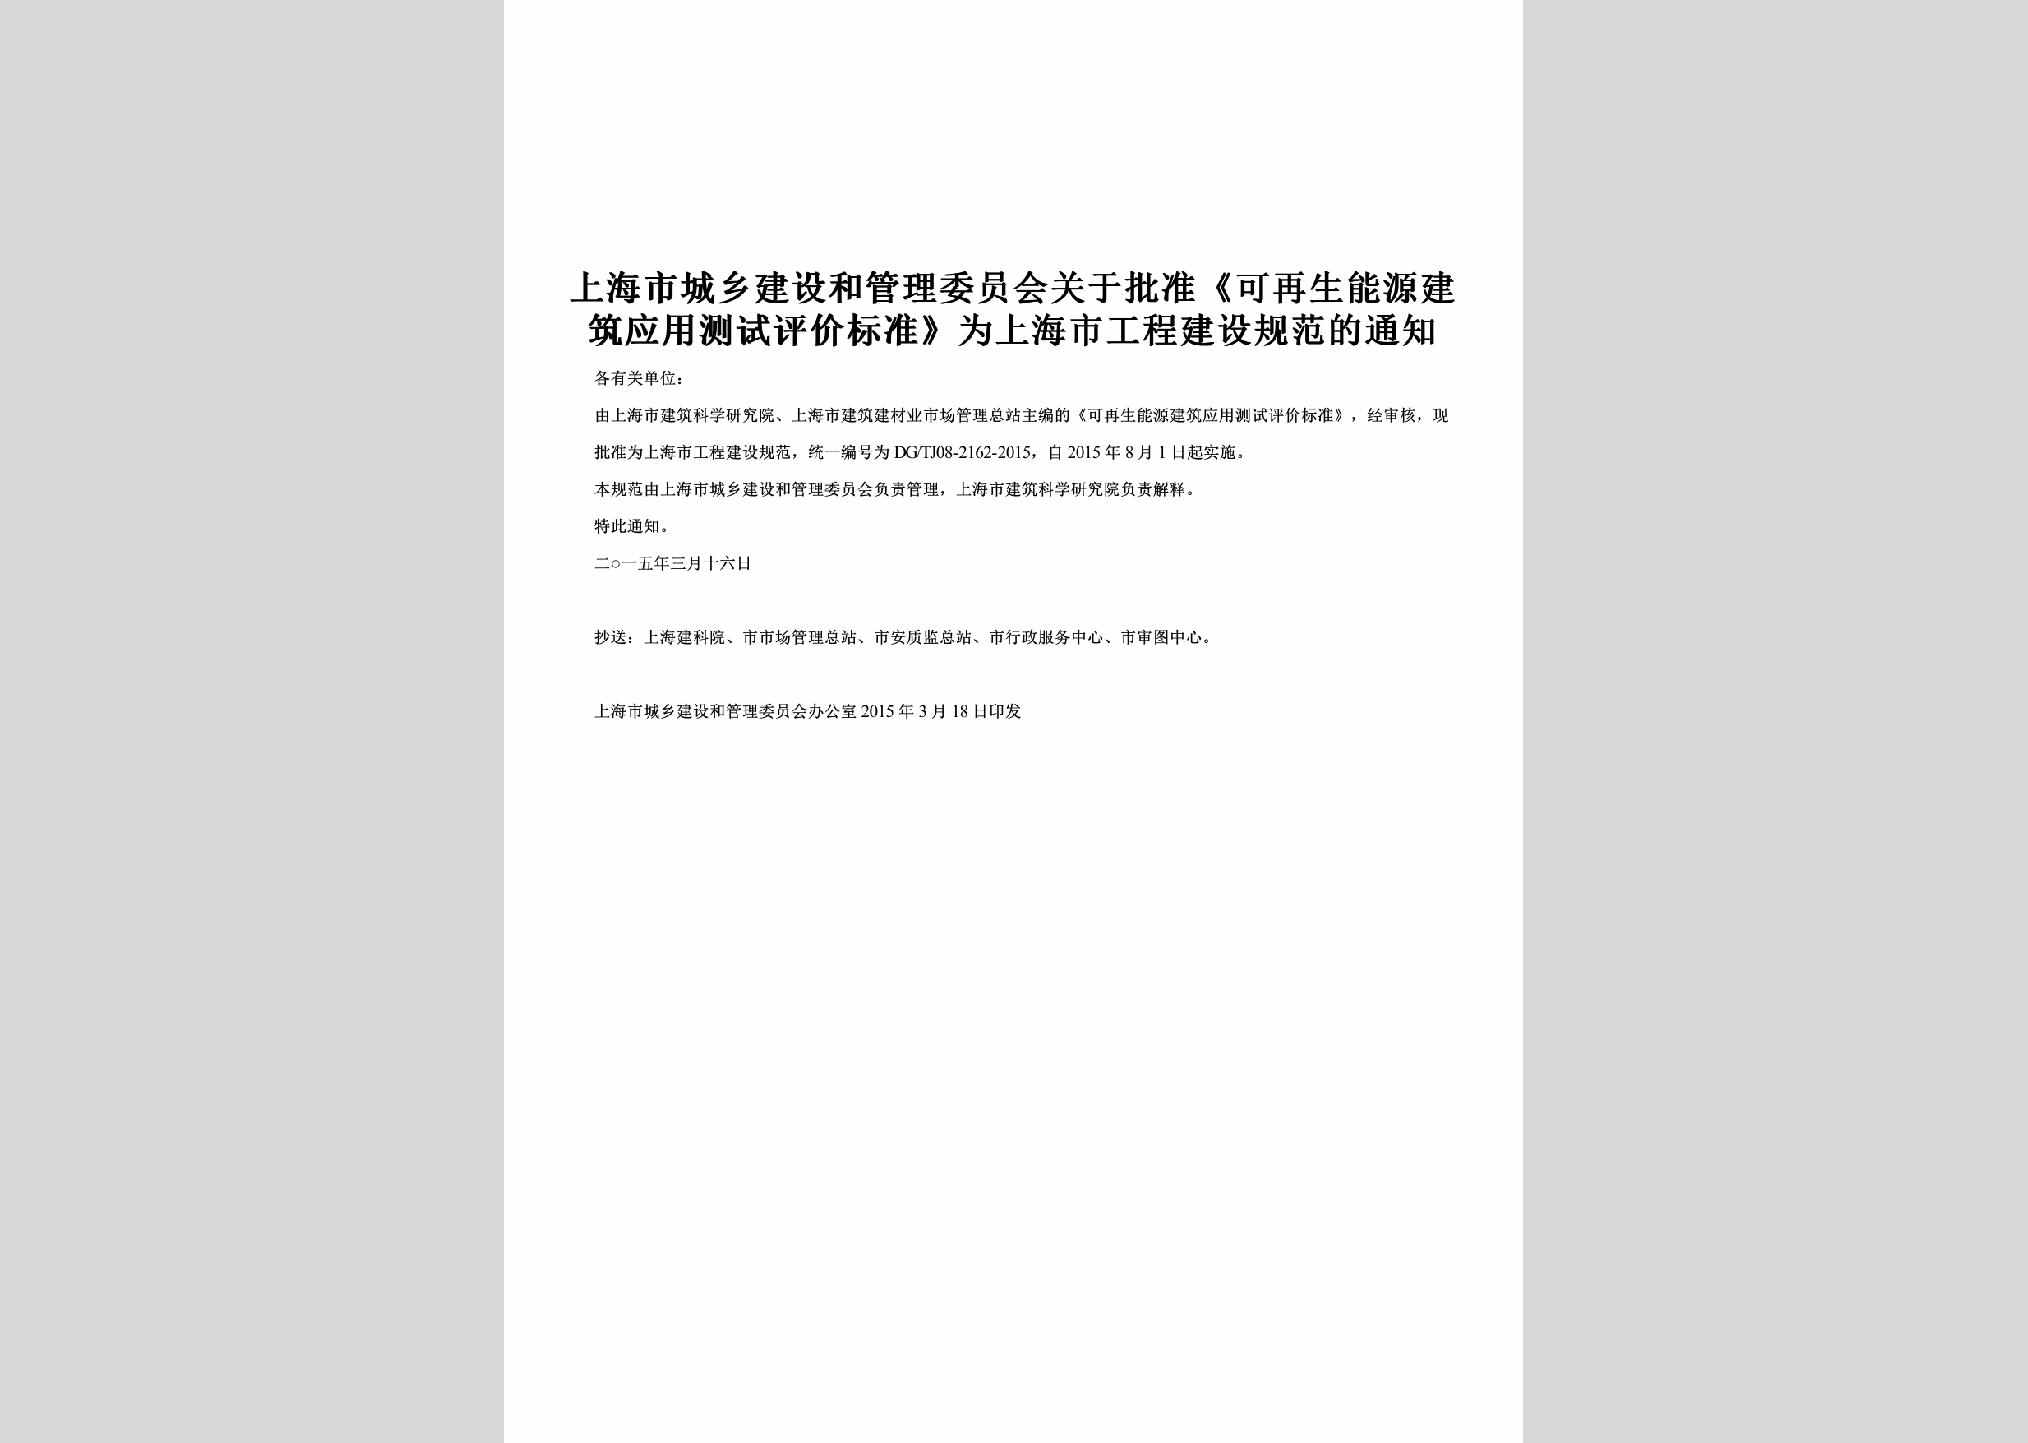 SH-JZCSPJTZ-2015：关于批准《可再生能源建筑应用测试评价标准》为上海市工程建设规范的通知